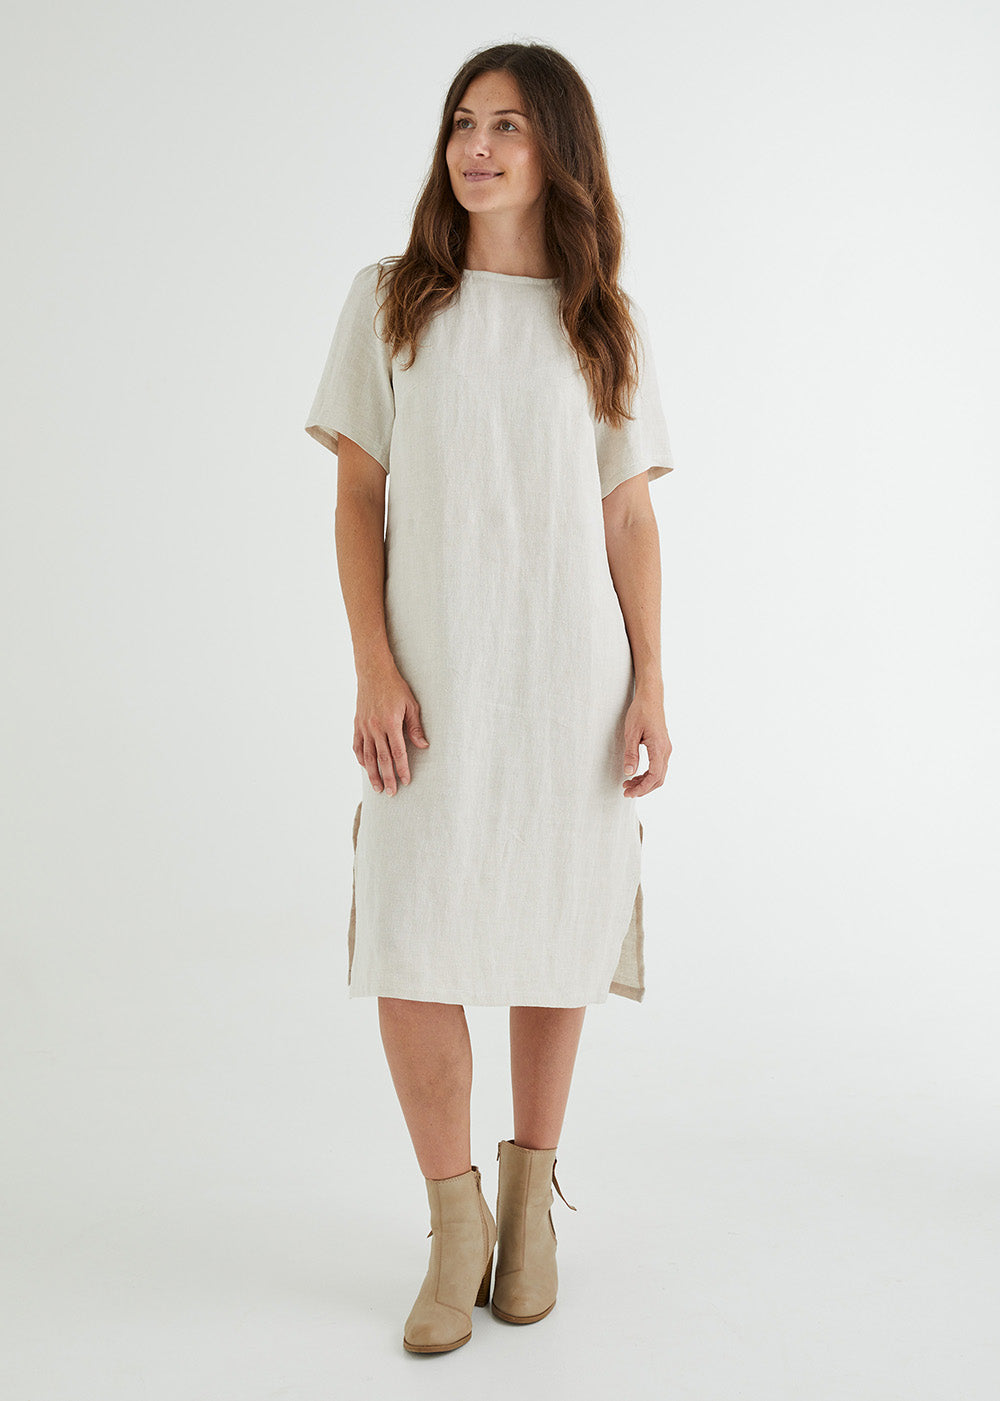 Sustainable Linen Dresses Australia